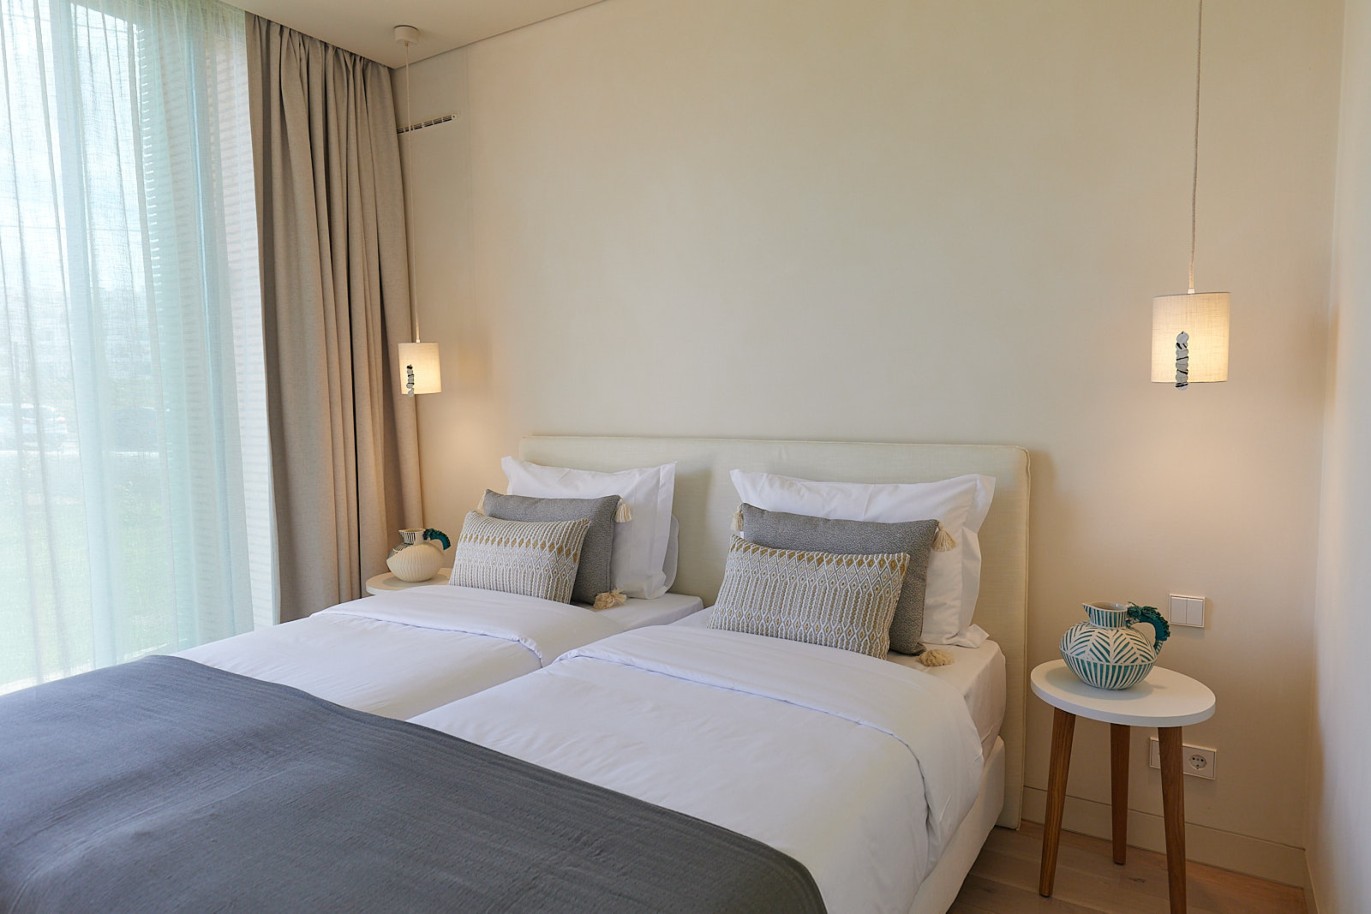 3 bedroom apartment in resort, for sale in Porches, Algarve_230740